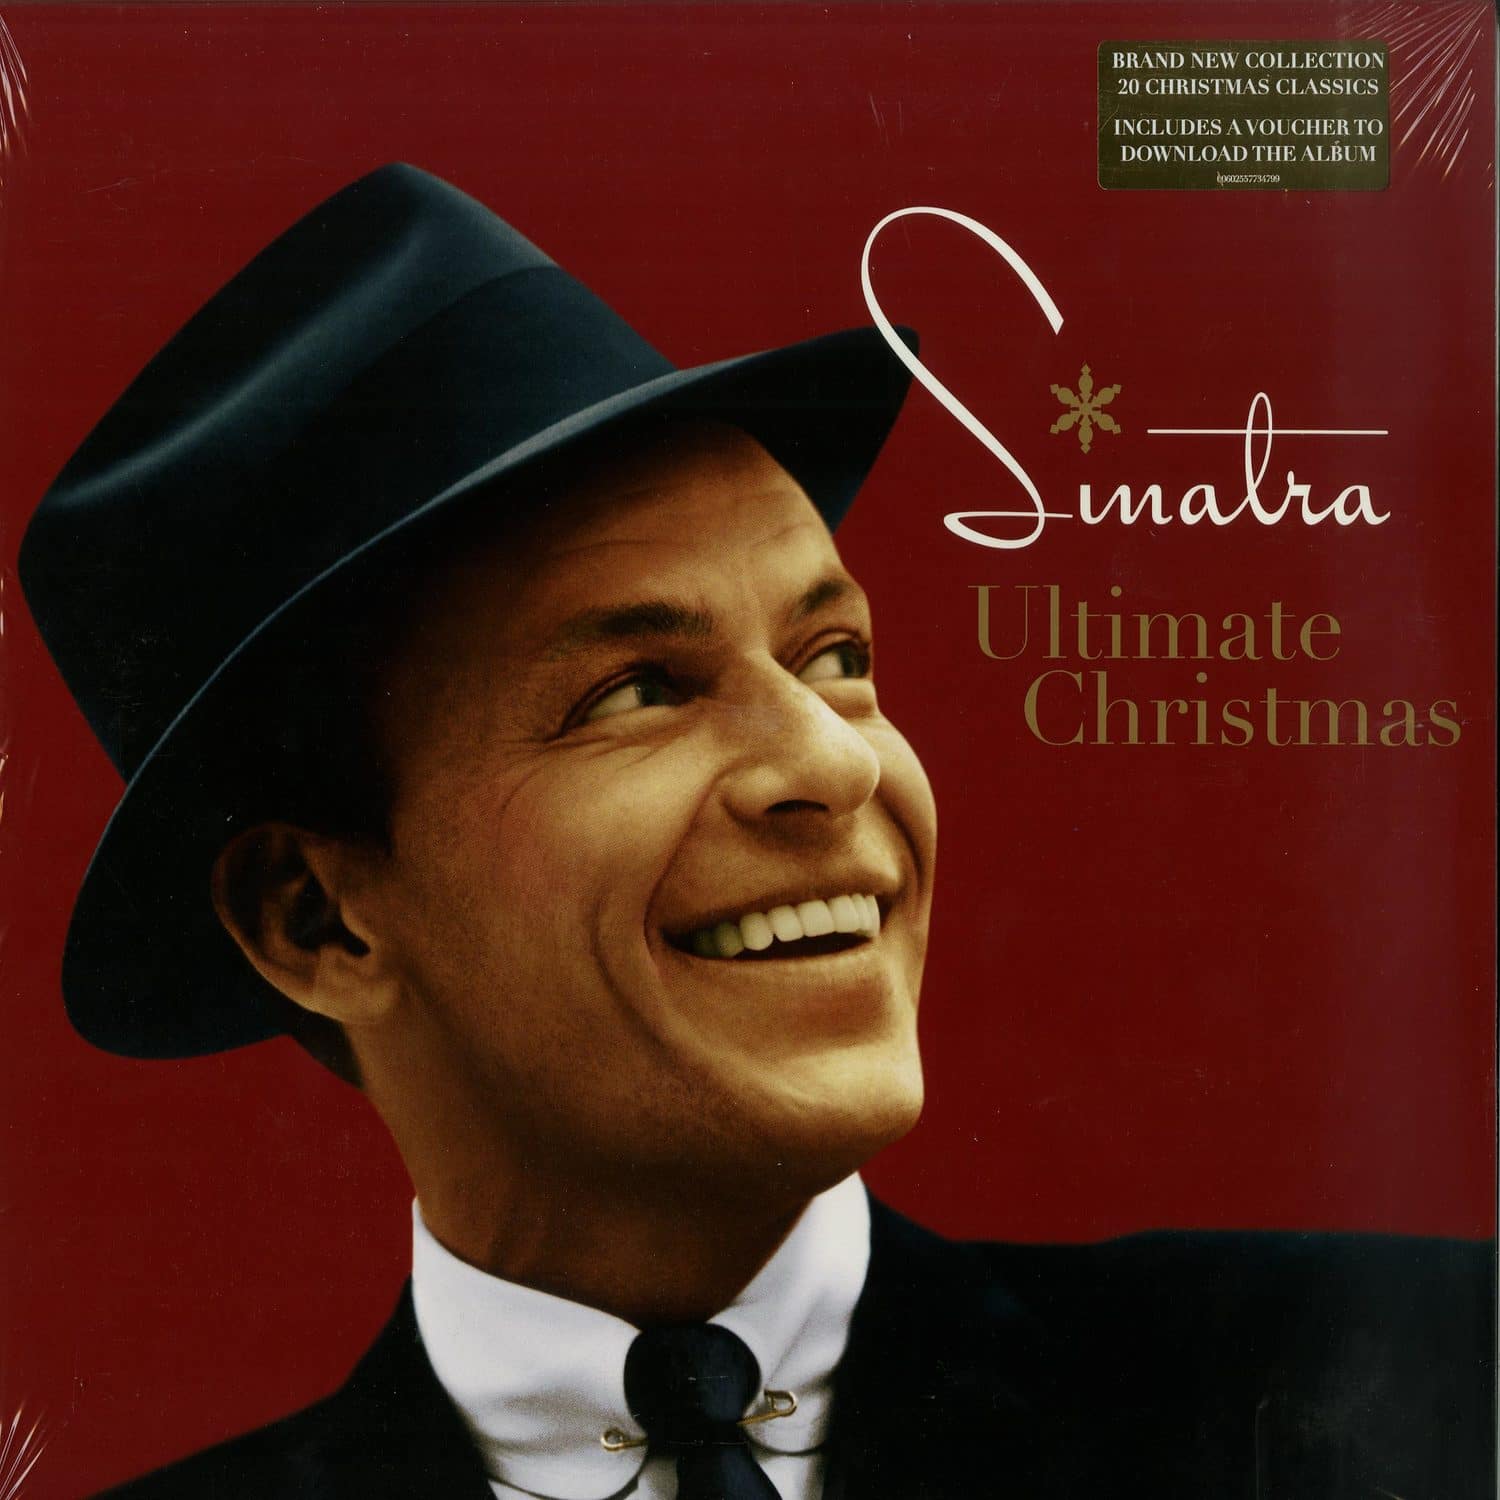 Frank Sinatra - ULTIMATE CHRISTMAS 